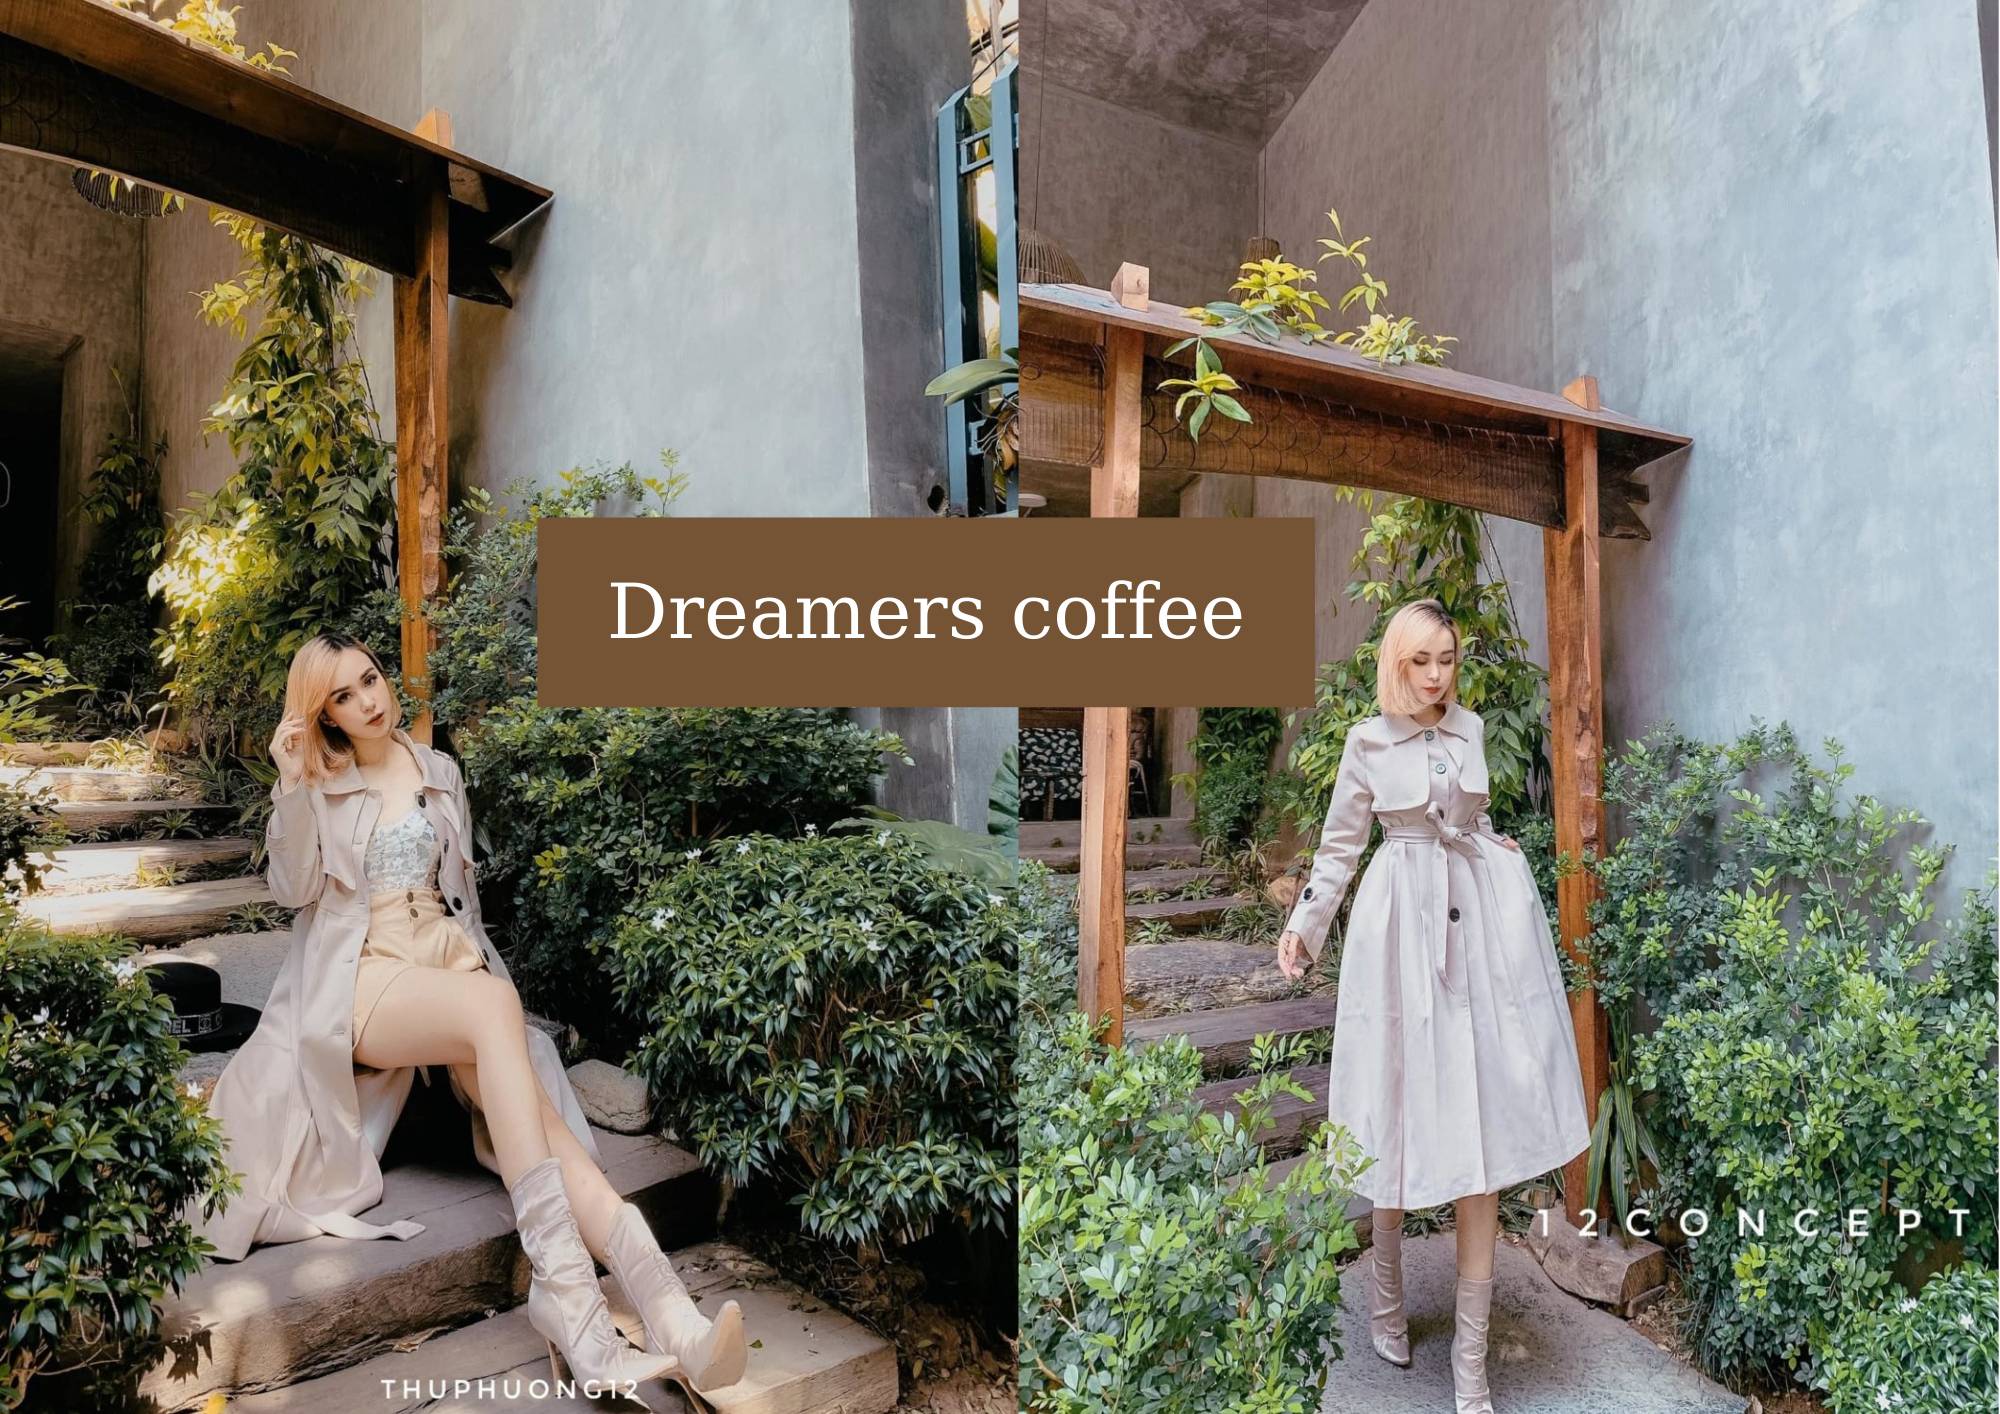 Dreamers coffee